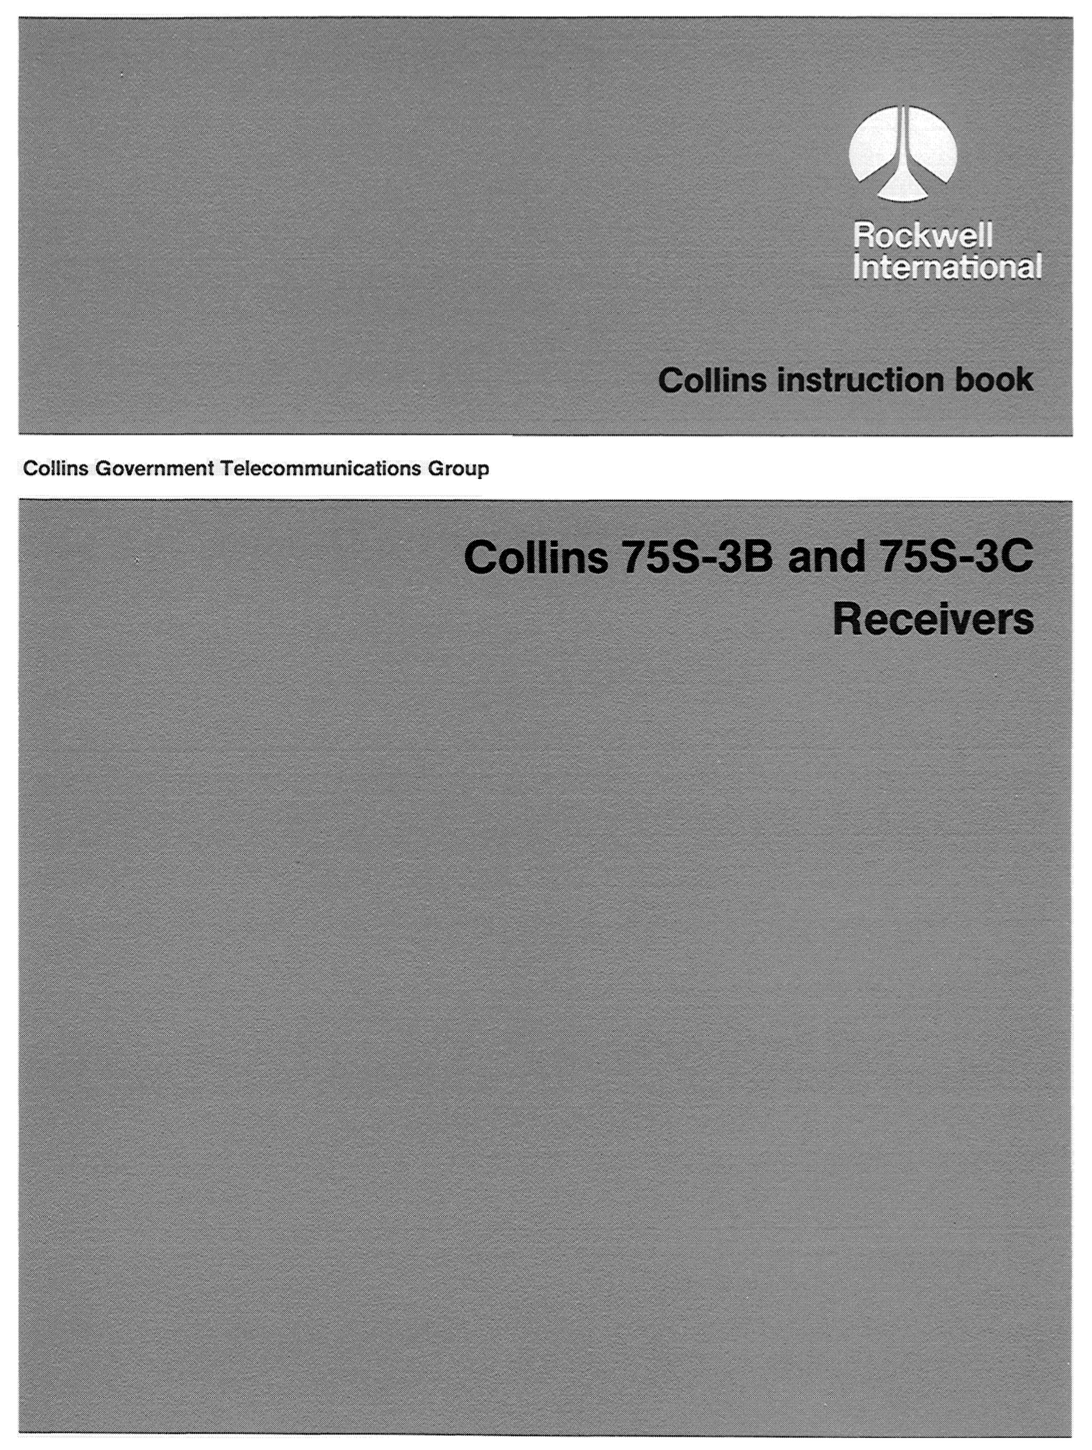 Collins Receiver Downloads | James Sawle (MD0MDI)